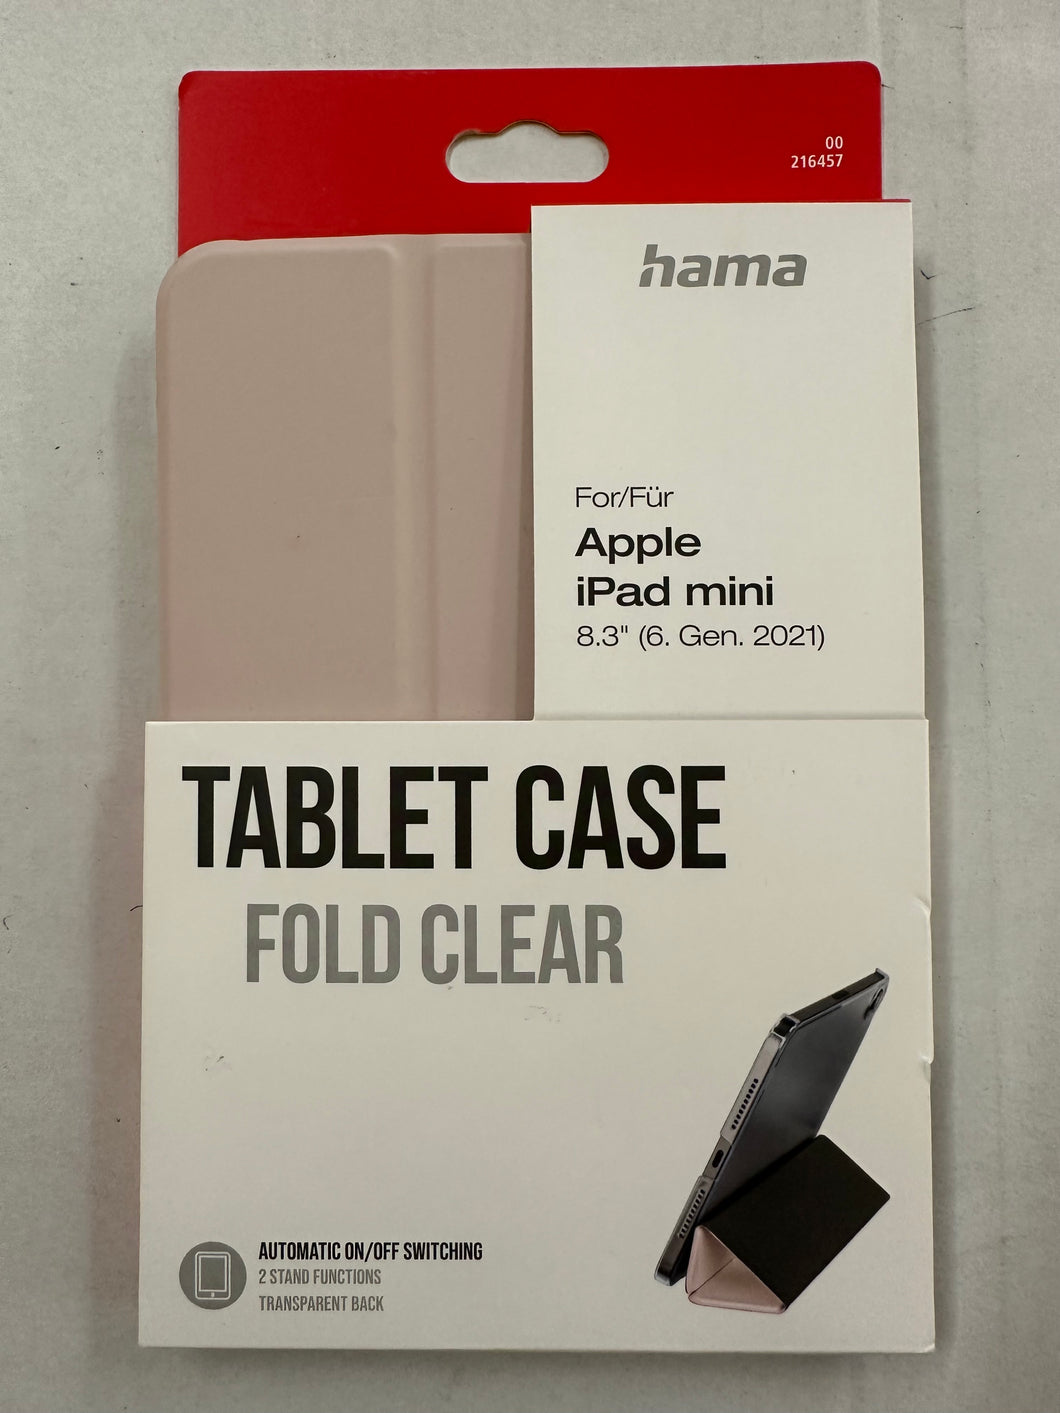 HAMA Fold Clear für Apple iPad mini (6. Gen./2021), Rosa (00216457) Tablet-Hülle